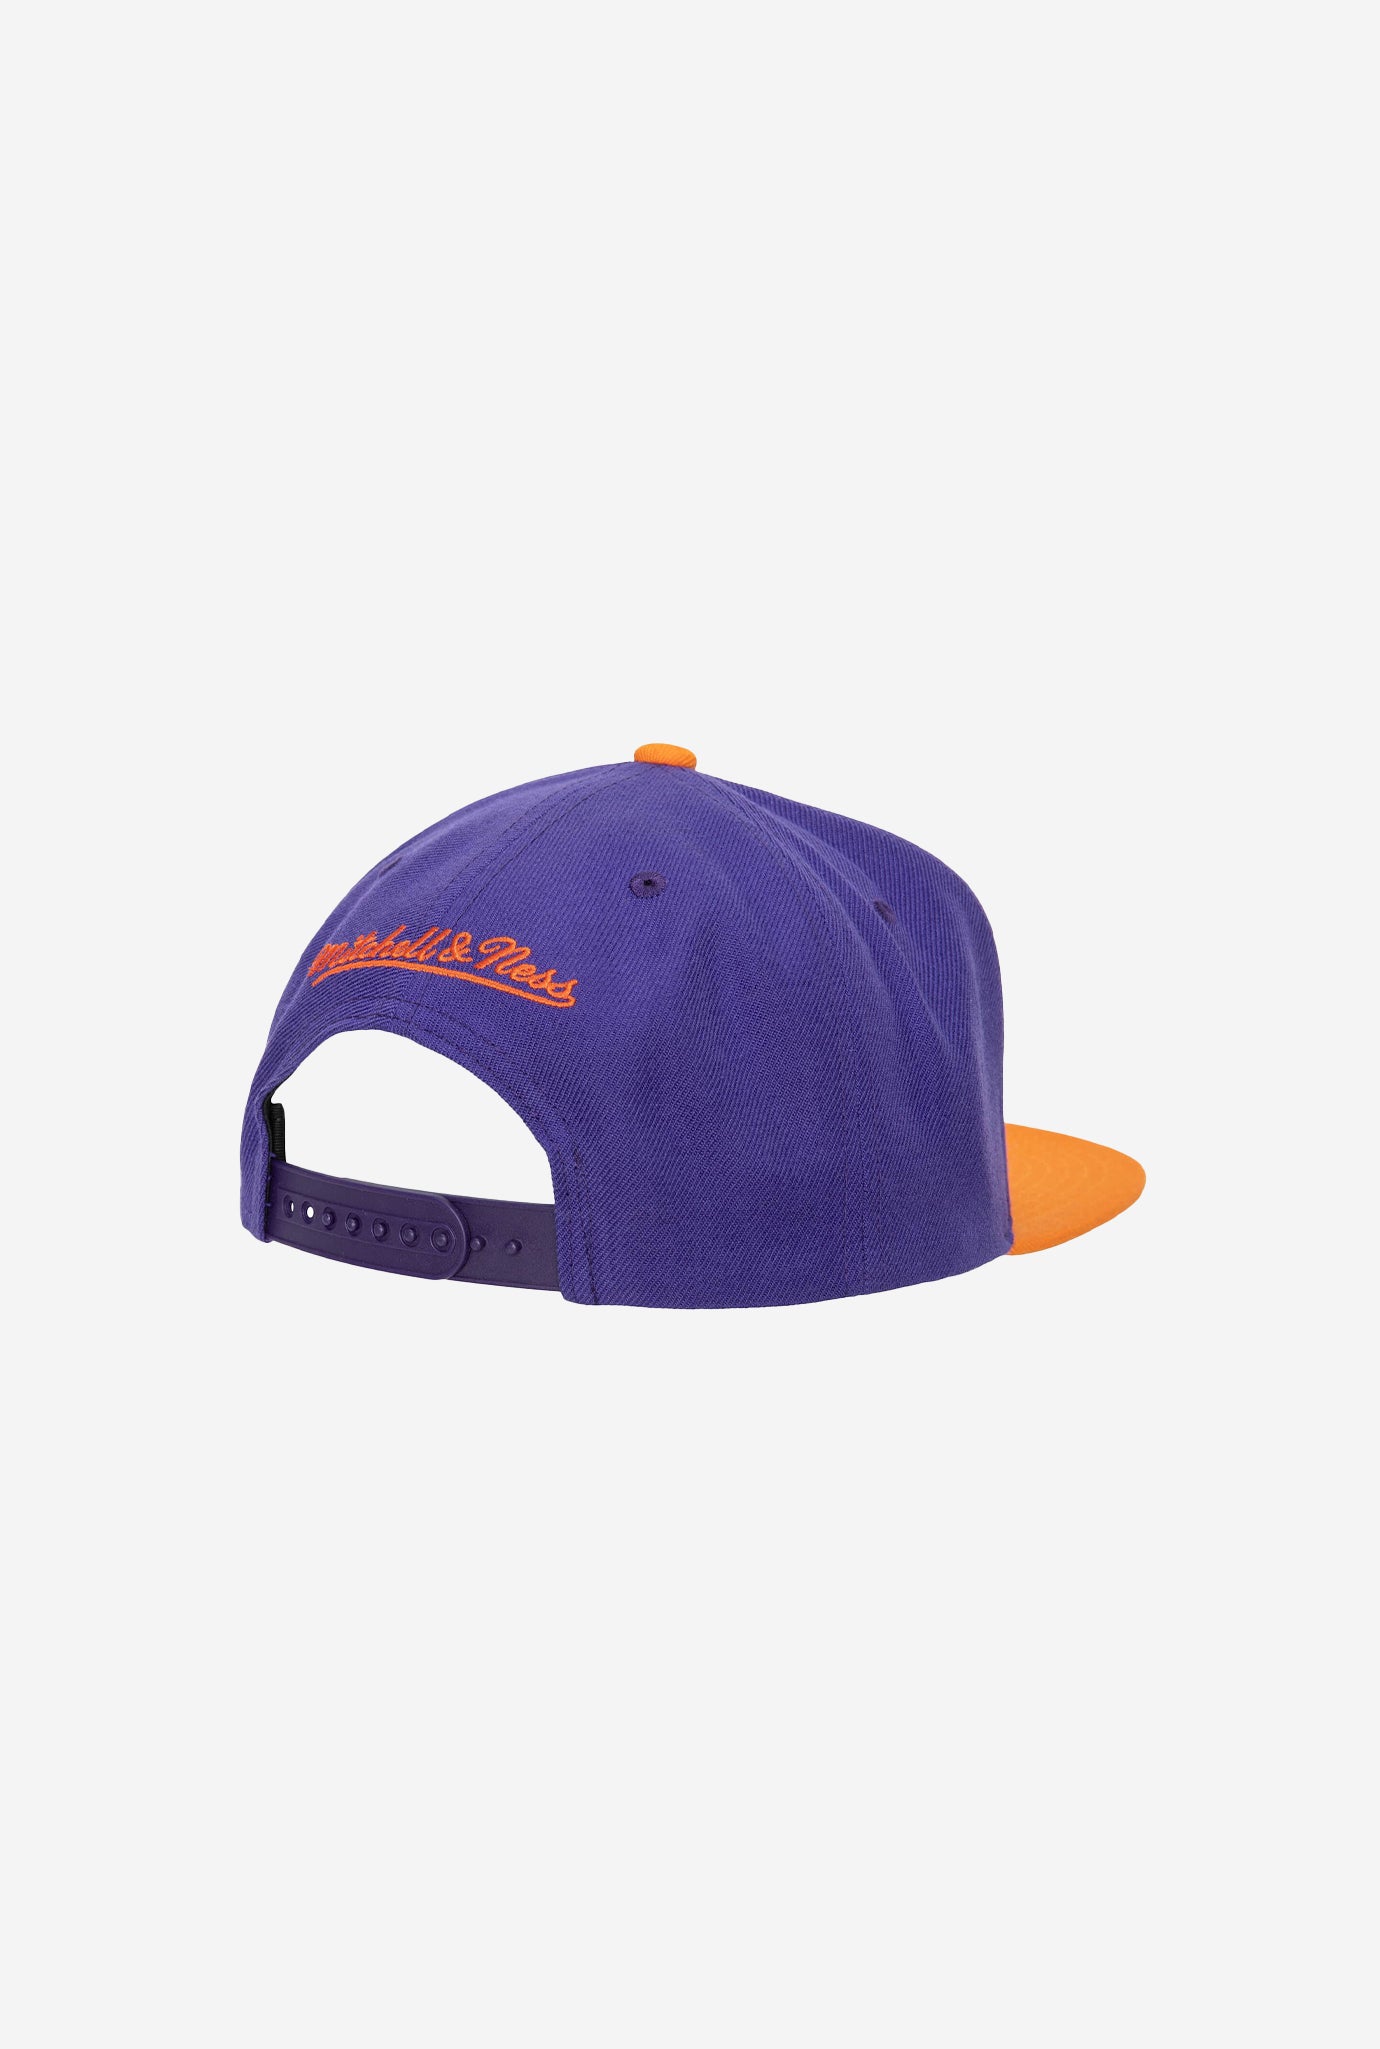 Phoenix Suns Team 2 Tone 2.0 Snapback HWC - Purple/Orange